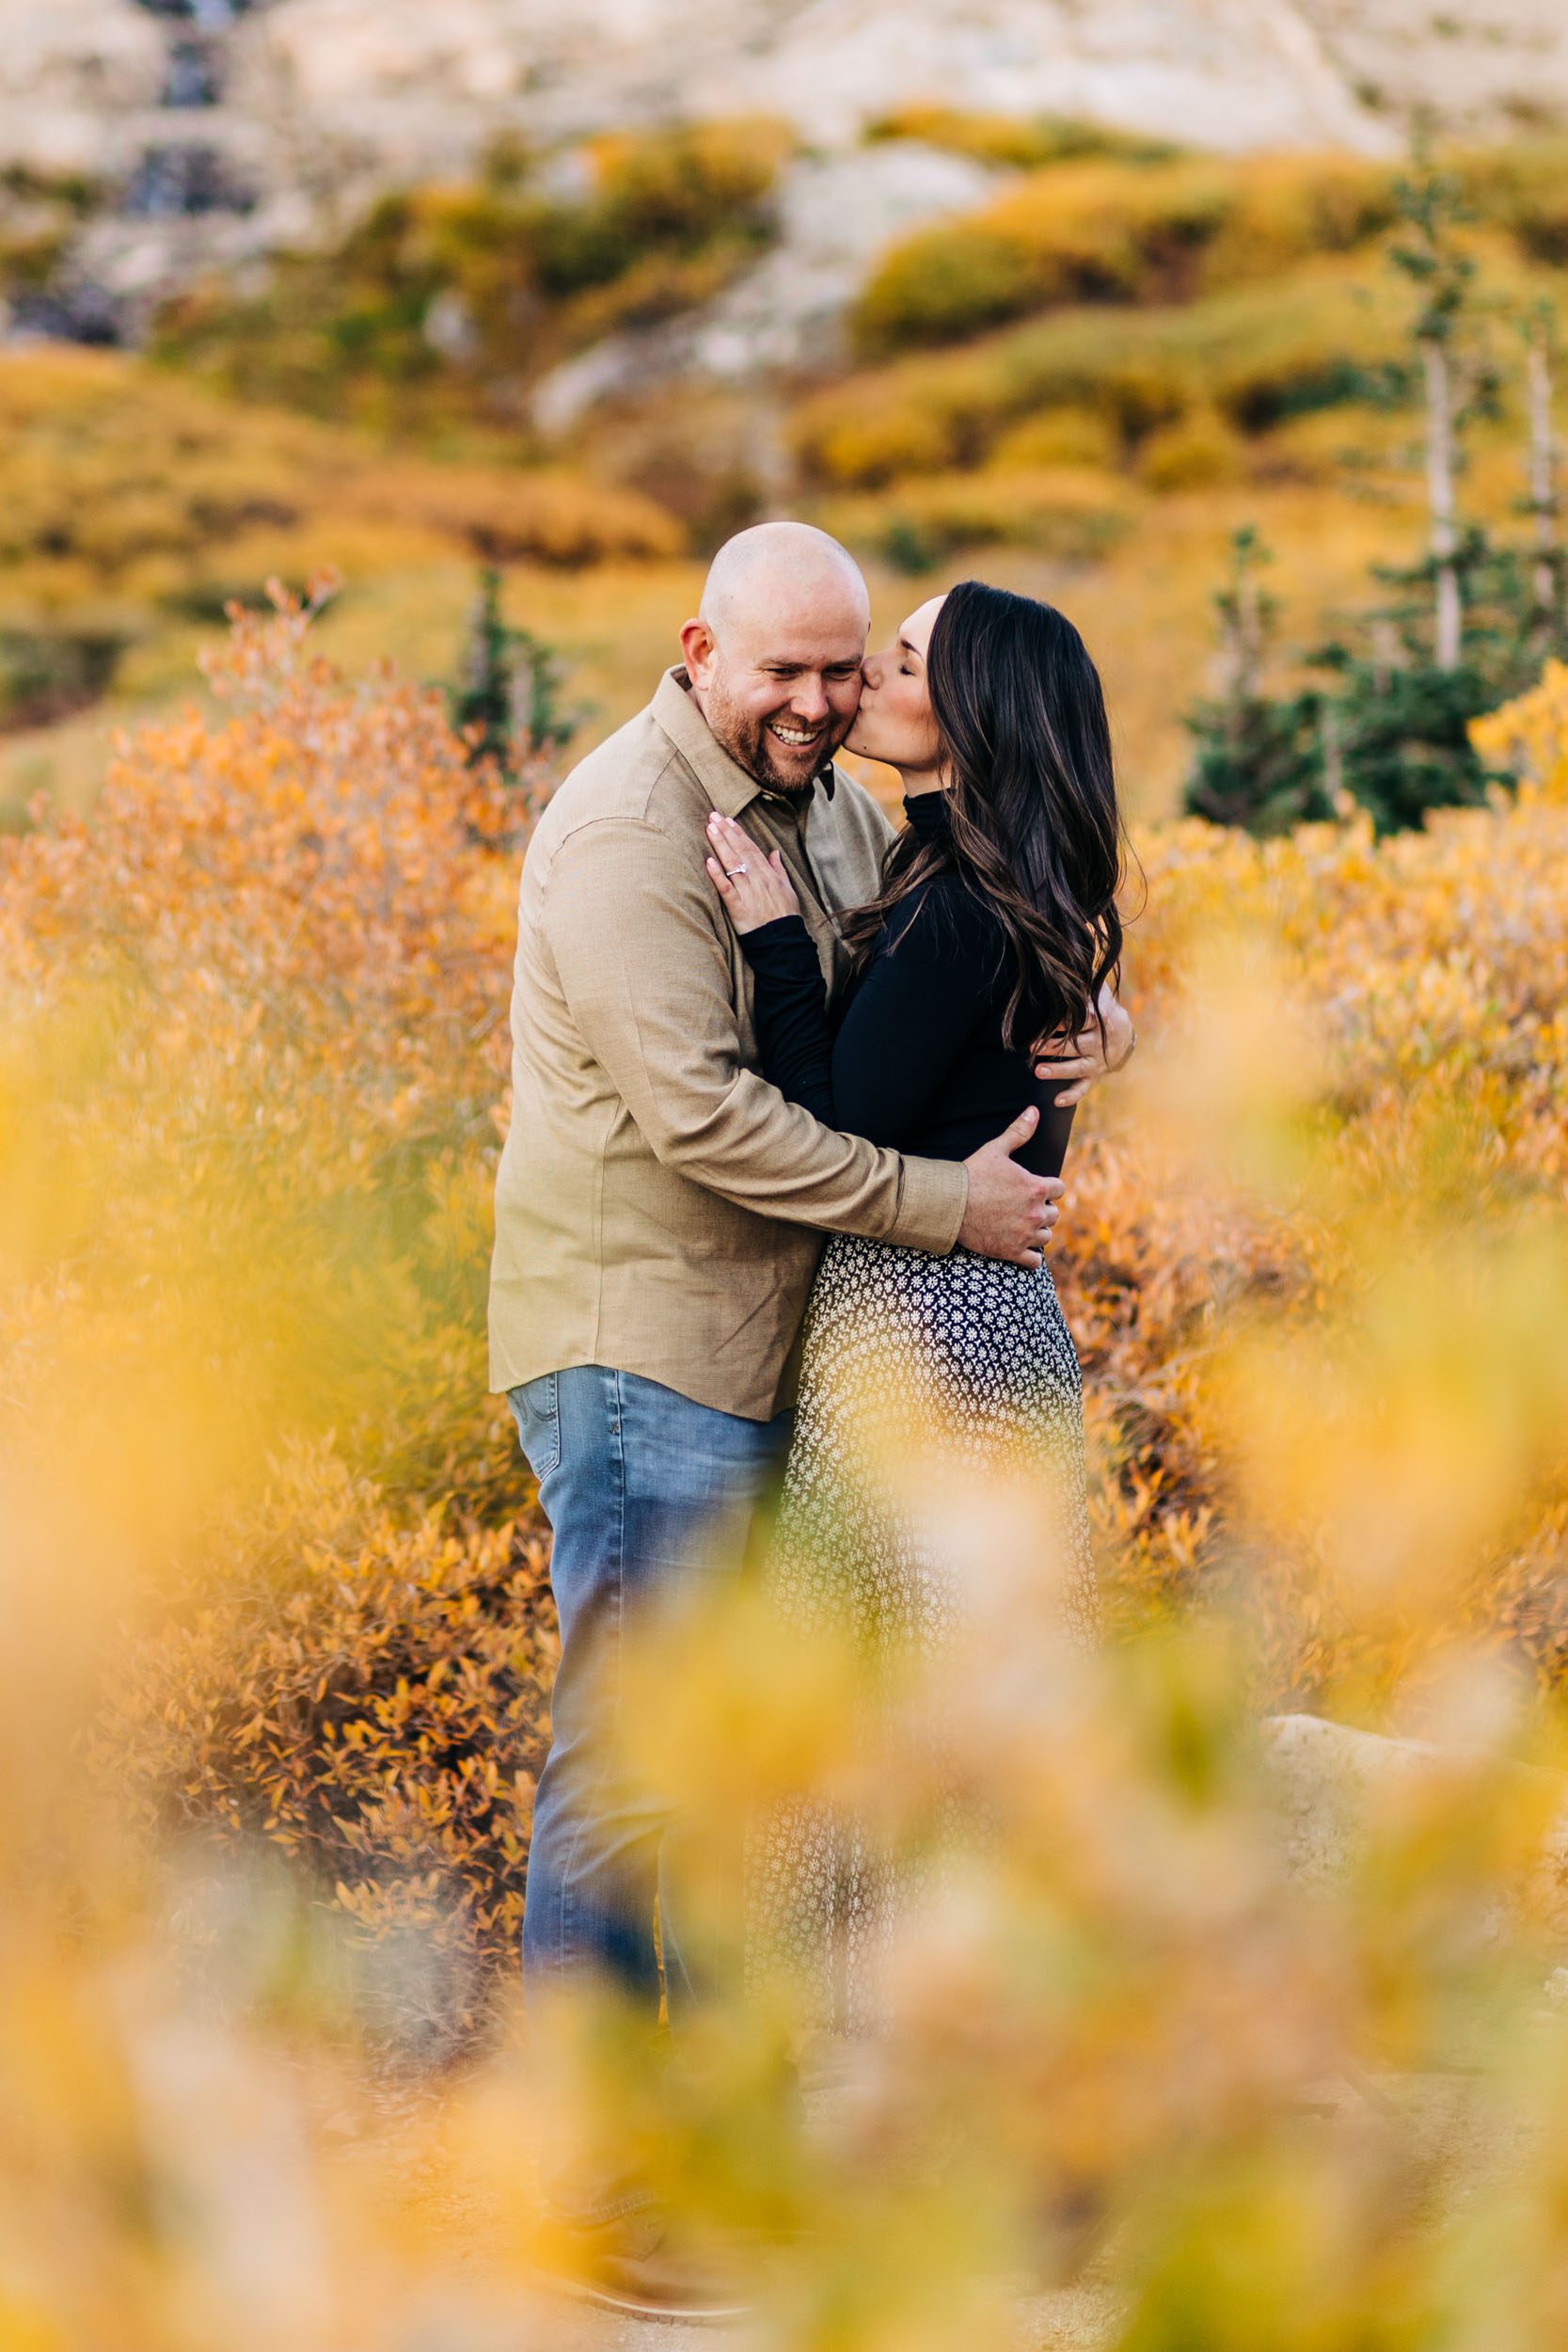 classic fall engagement photo where woman is kissing man's cheek